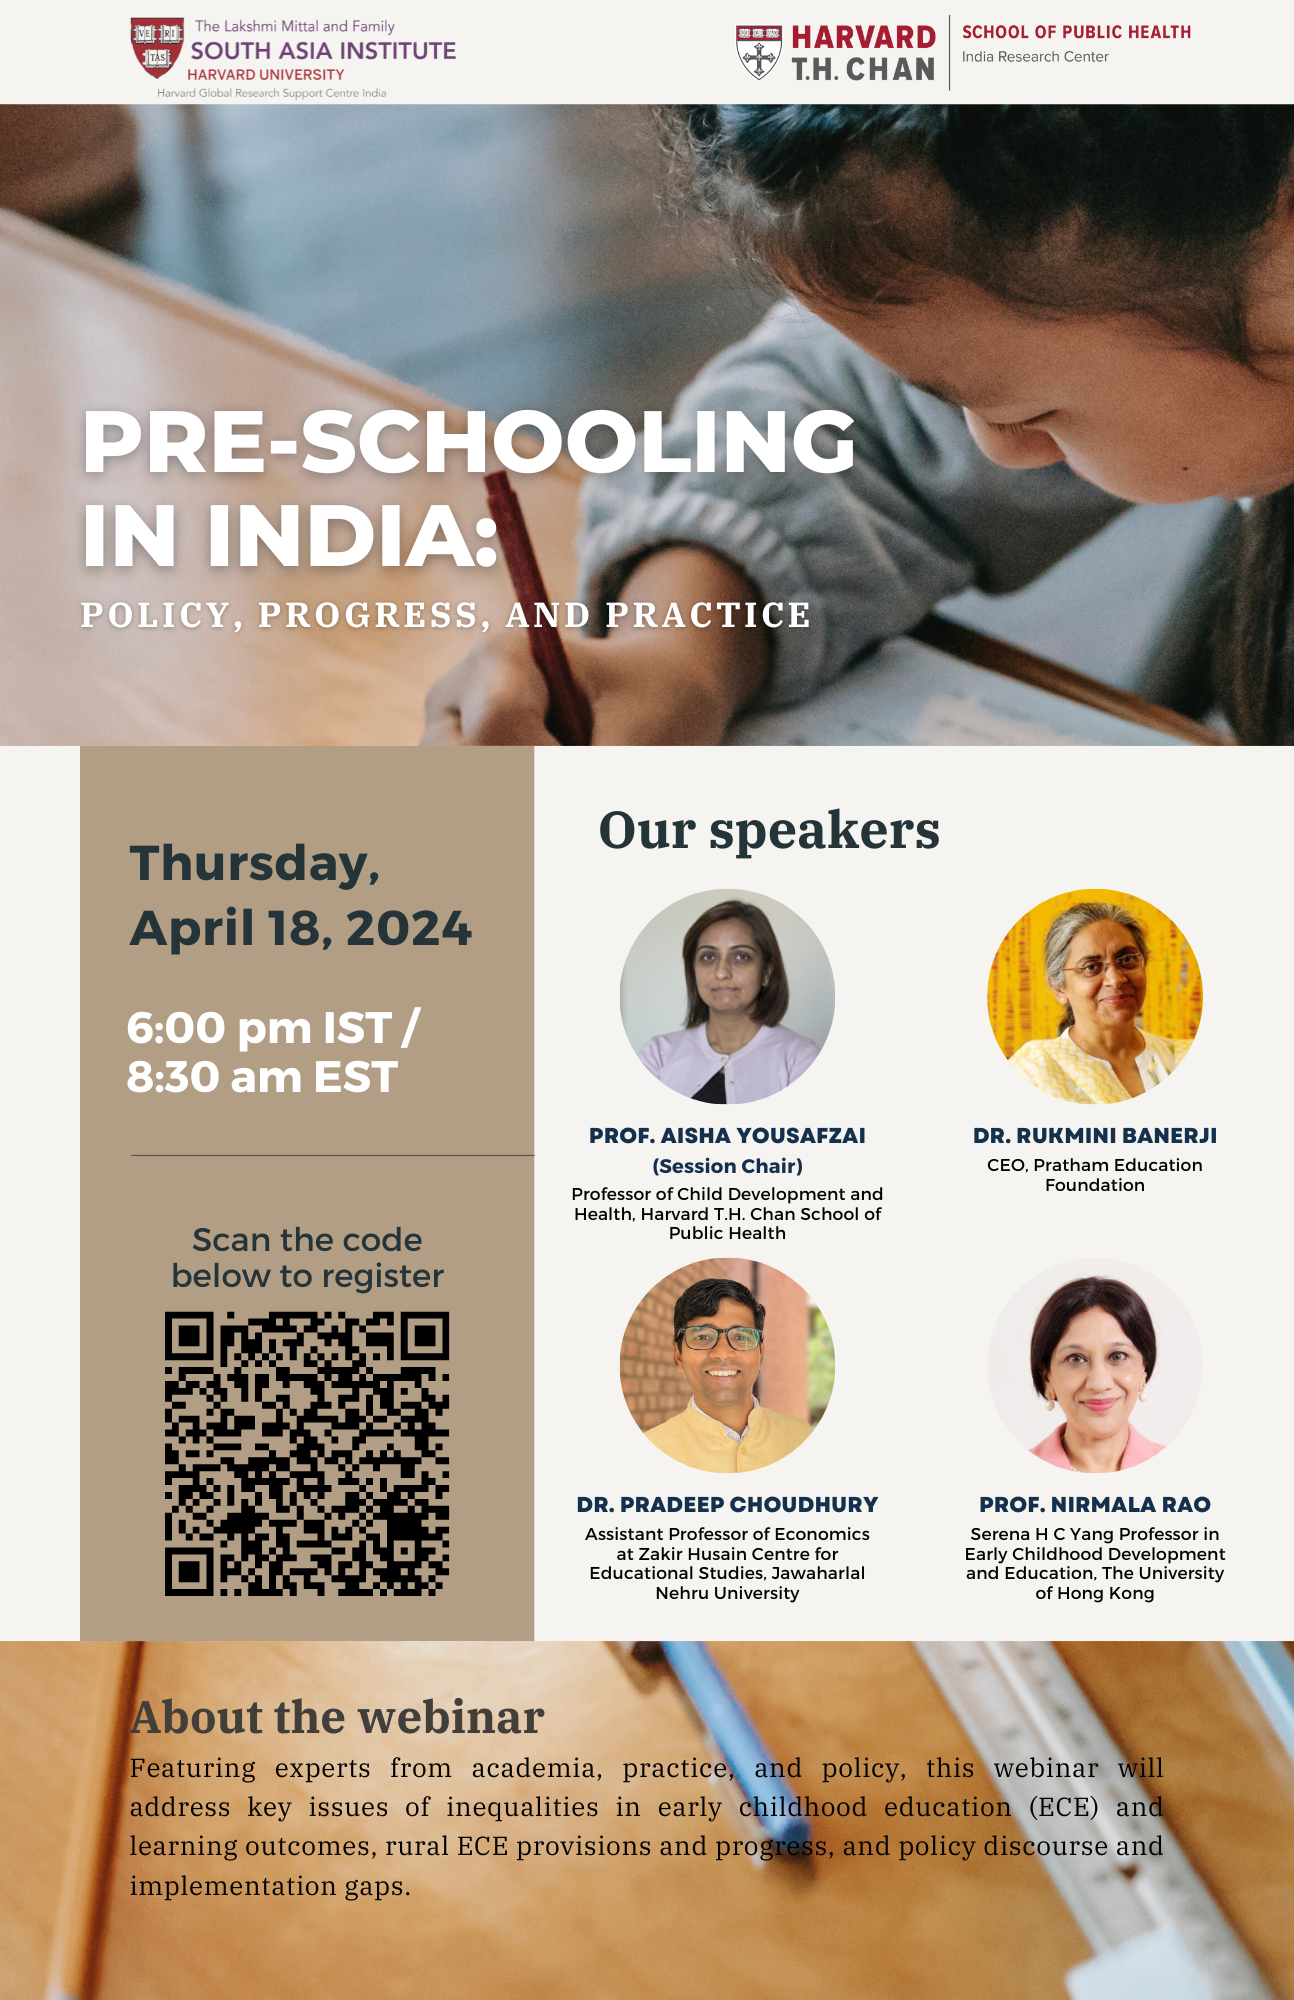 – Webinar “Pre-schooling in India: Policy, Progress, and Practice”